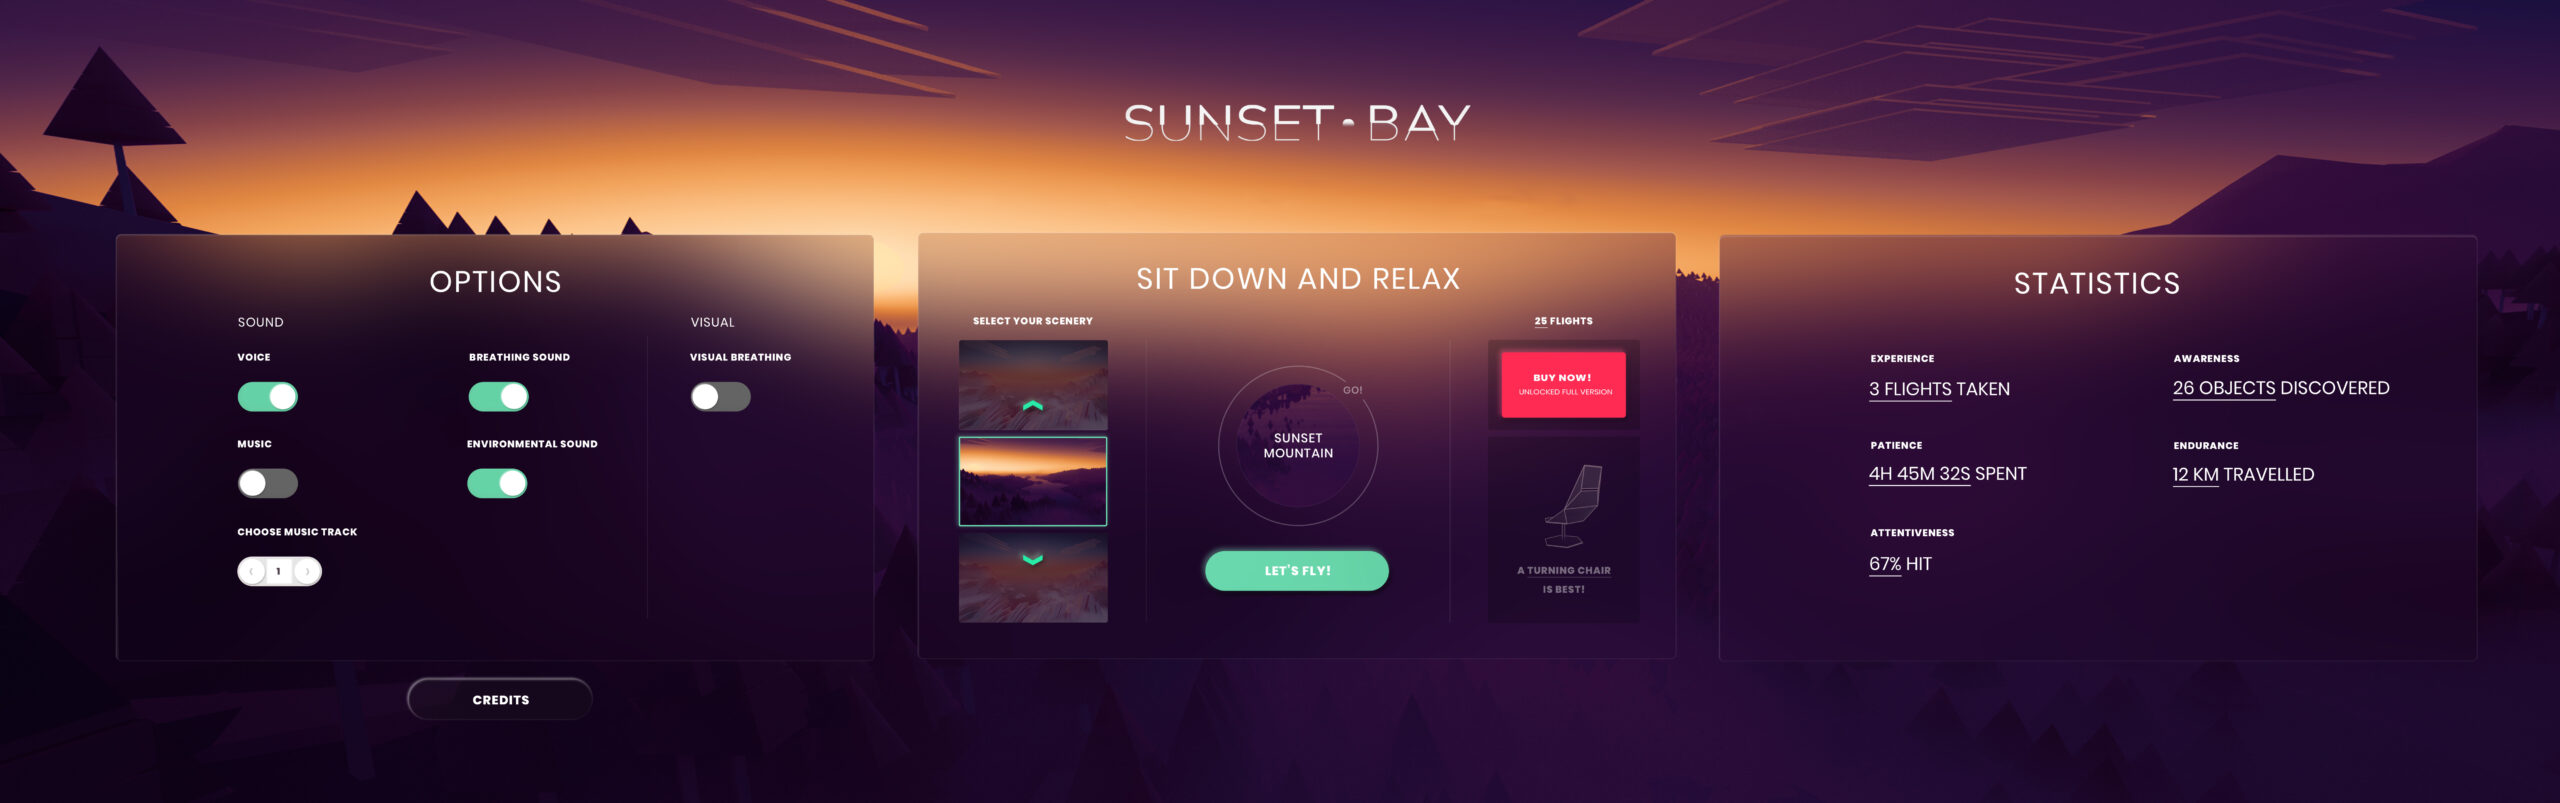 blokstudio_virtual_reality_app_sunset_bay_016